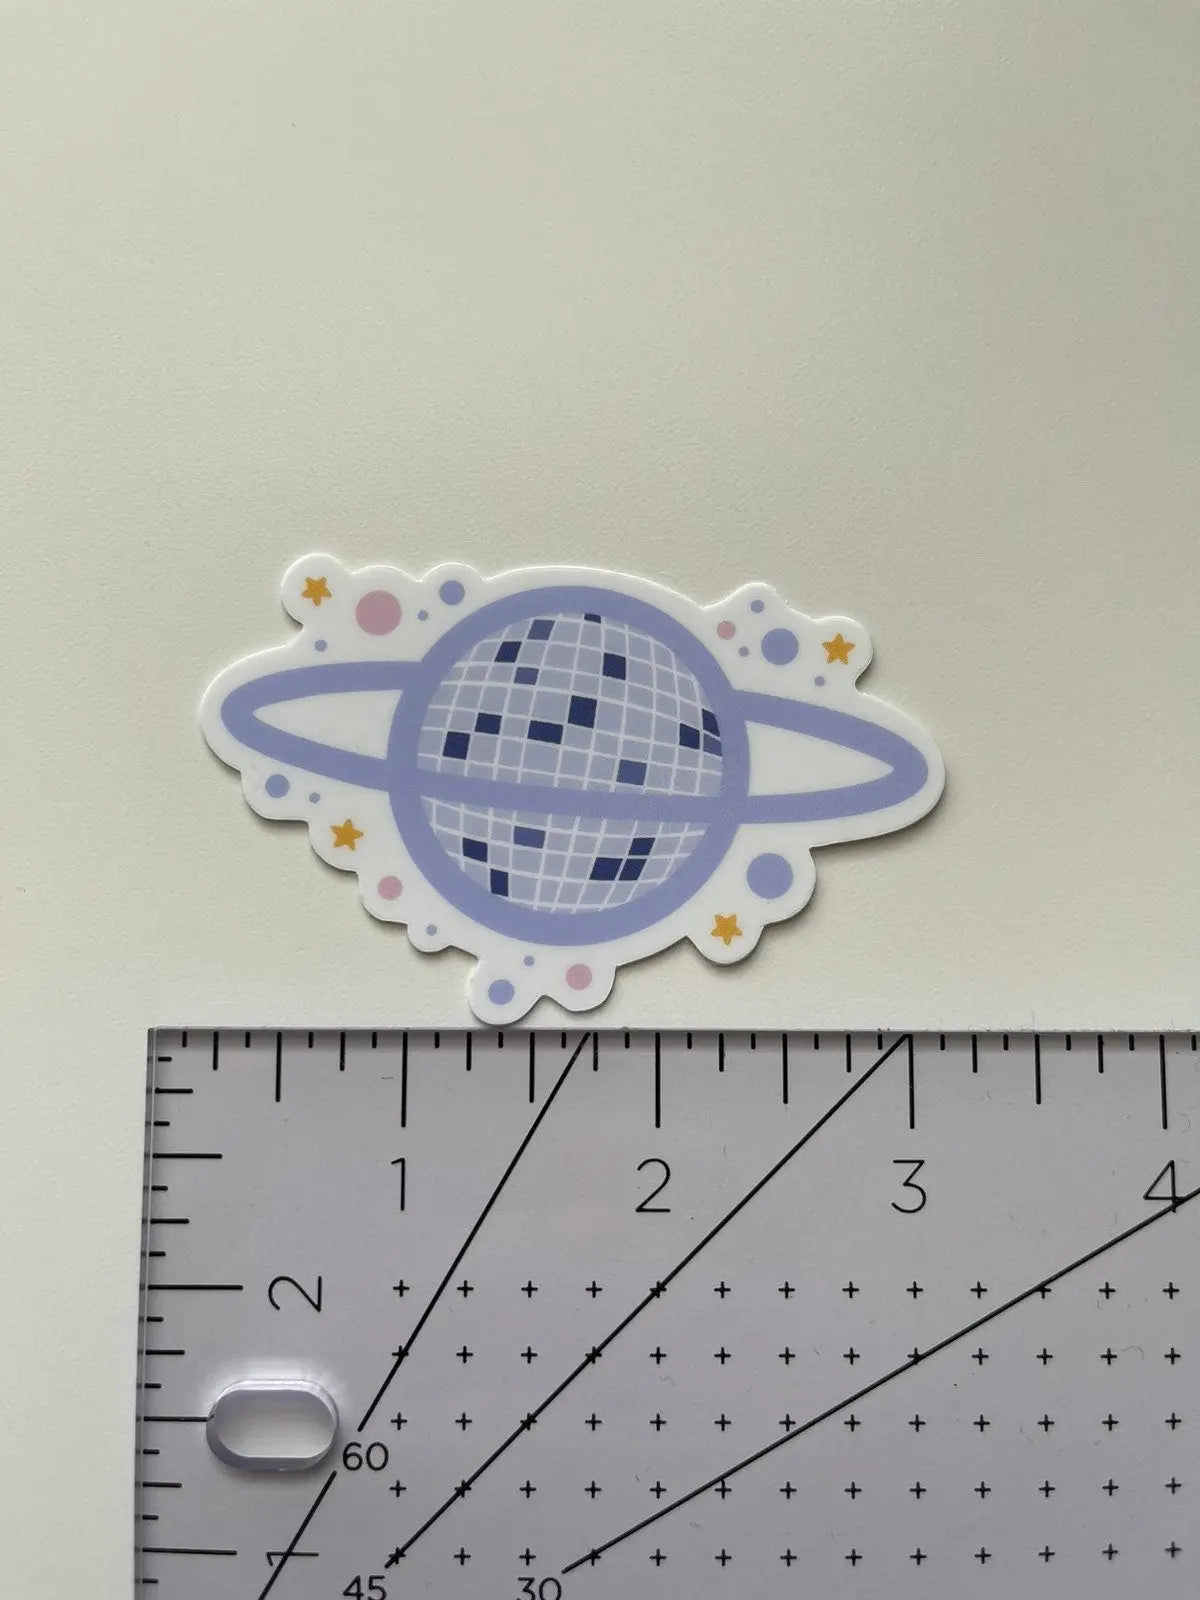 Disco ball planet sticker MangoIllustrated